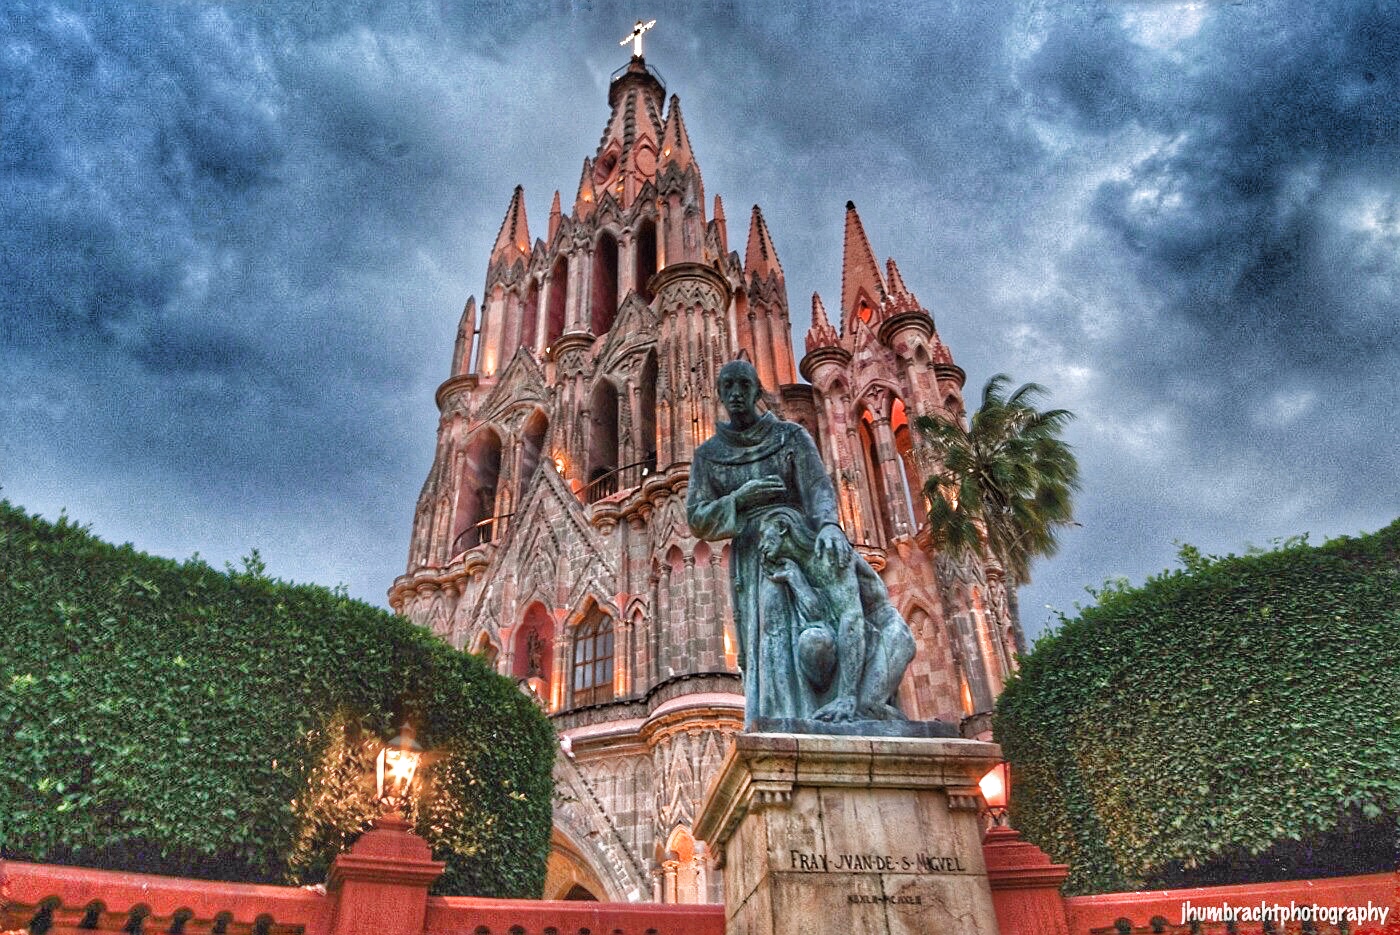 Parroquia de San Miguel Archangel in San Miguel de Allende Mexico photo taken by Indiana Architectural Photographer Jason Humbracht in 2015